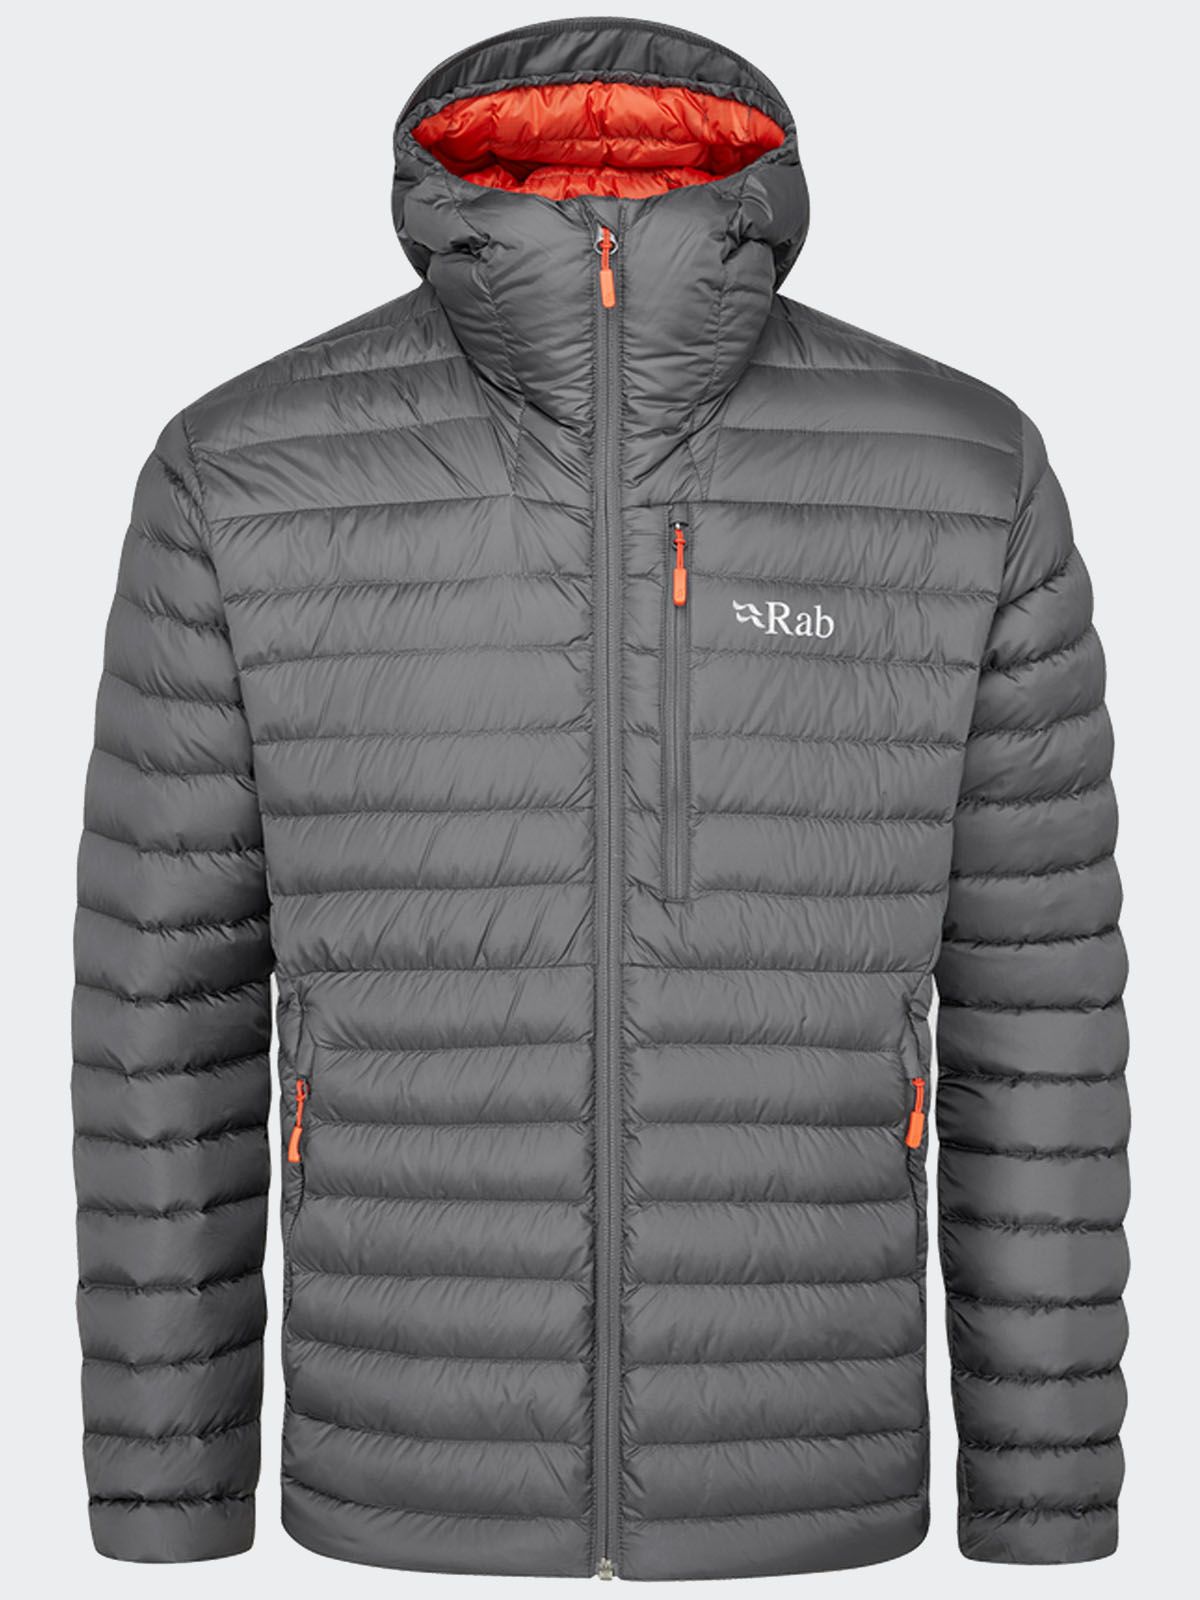 Buy Product : Rab Men's Microlight Alpine Jacket in Graphene